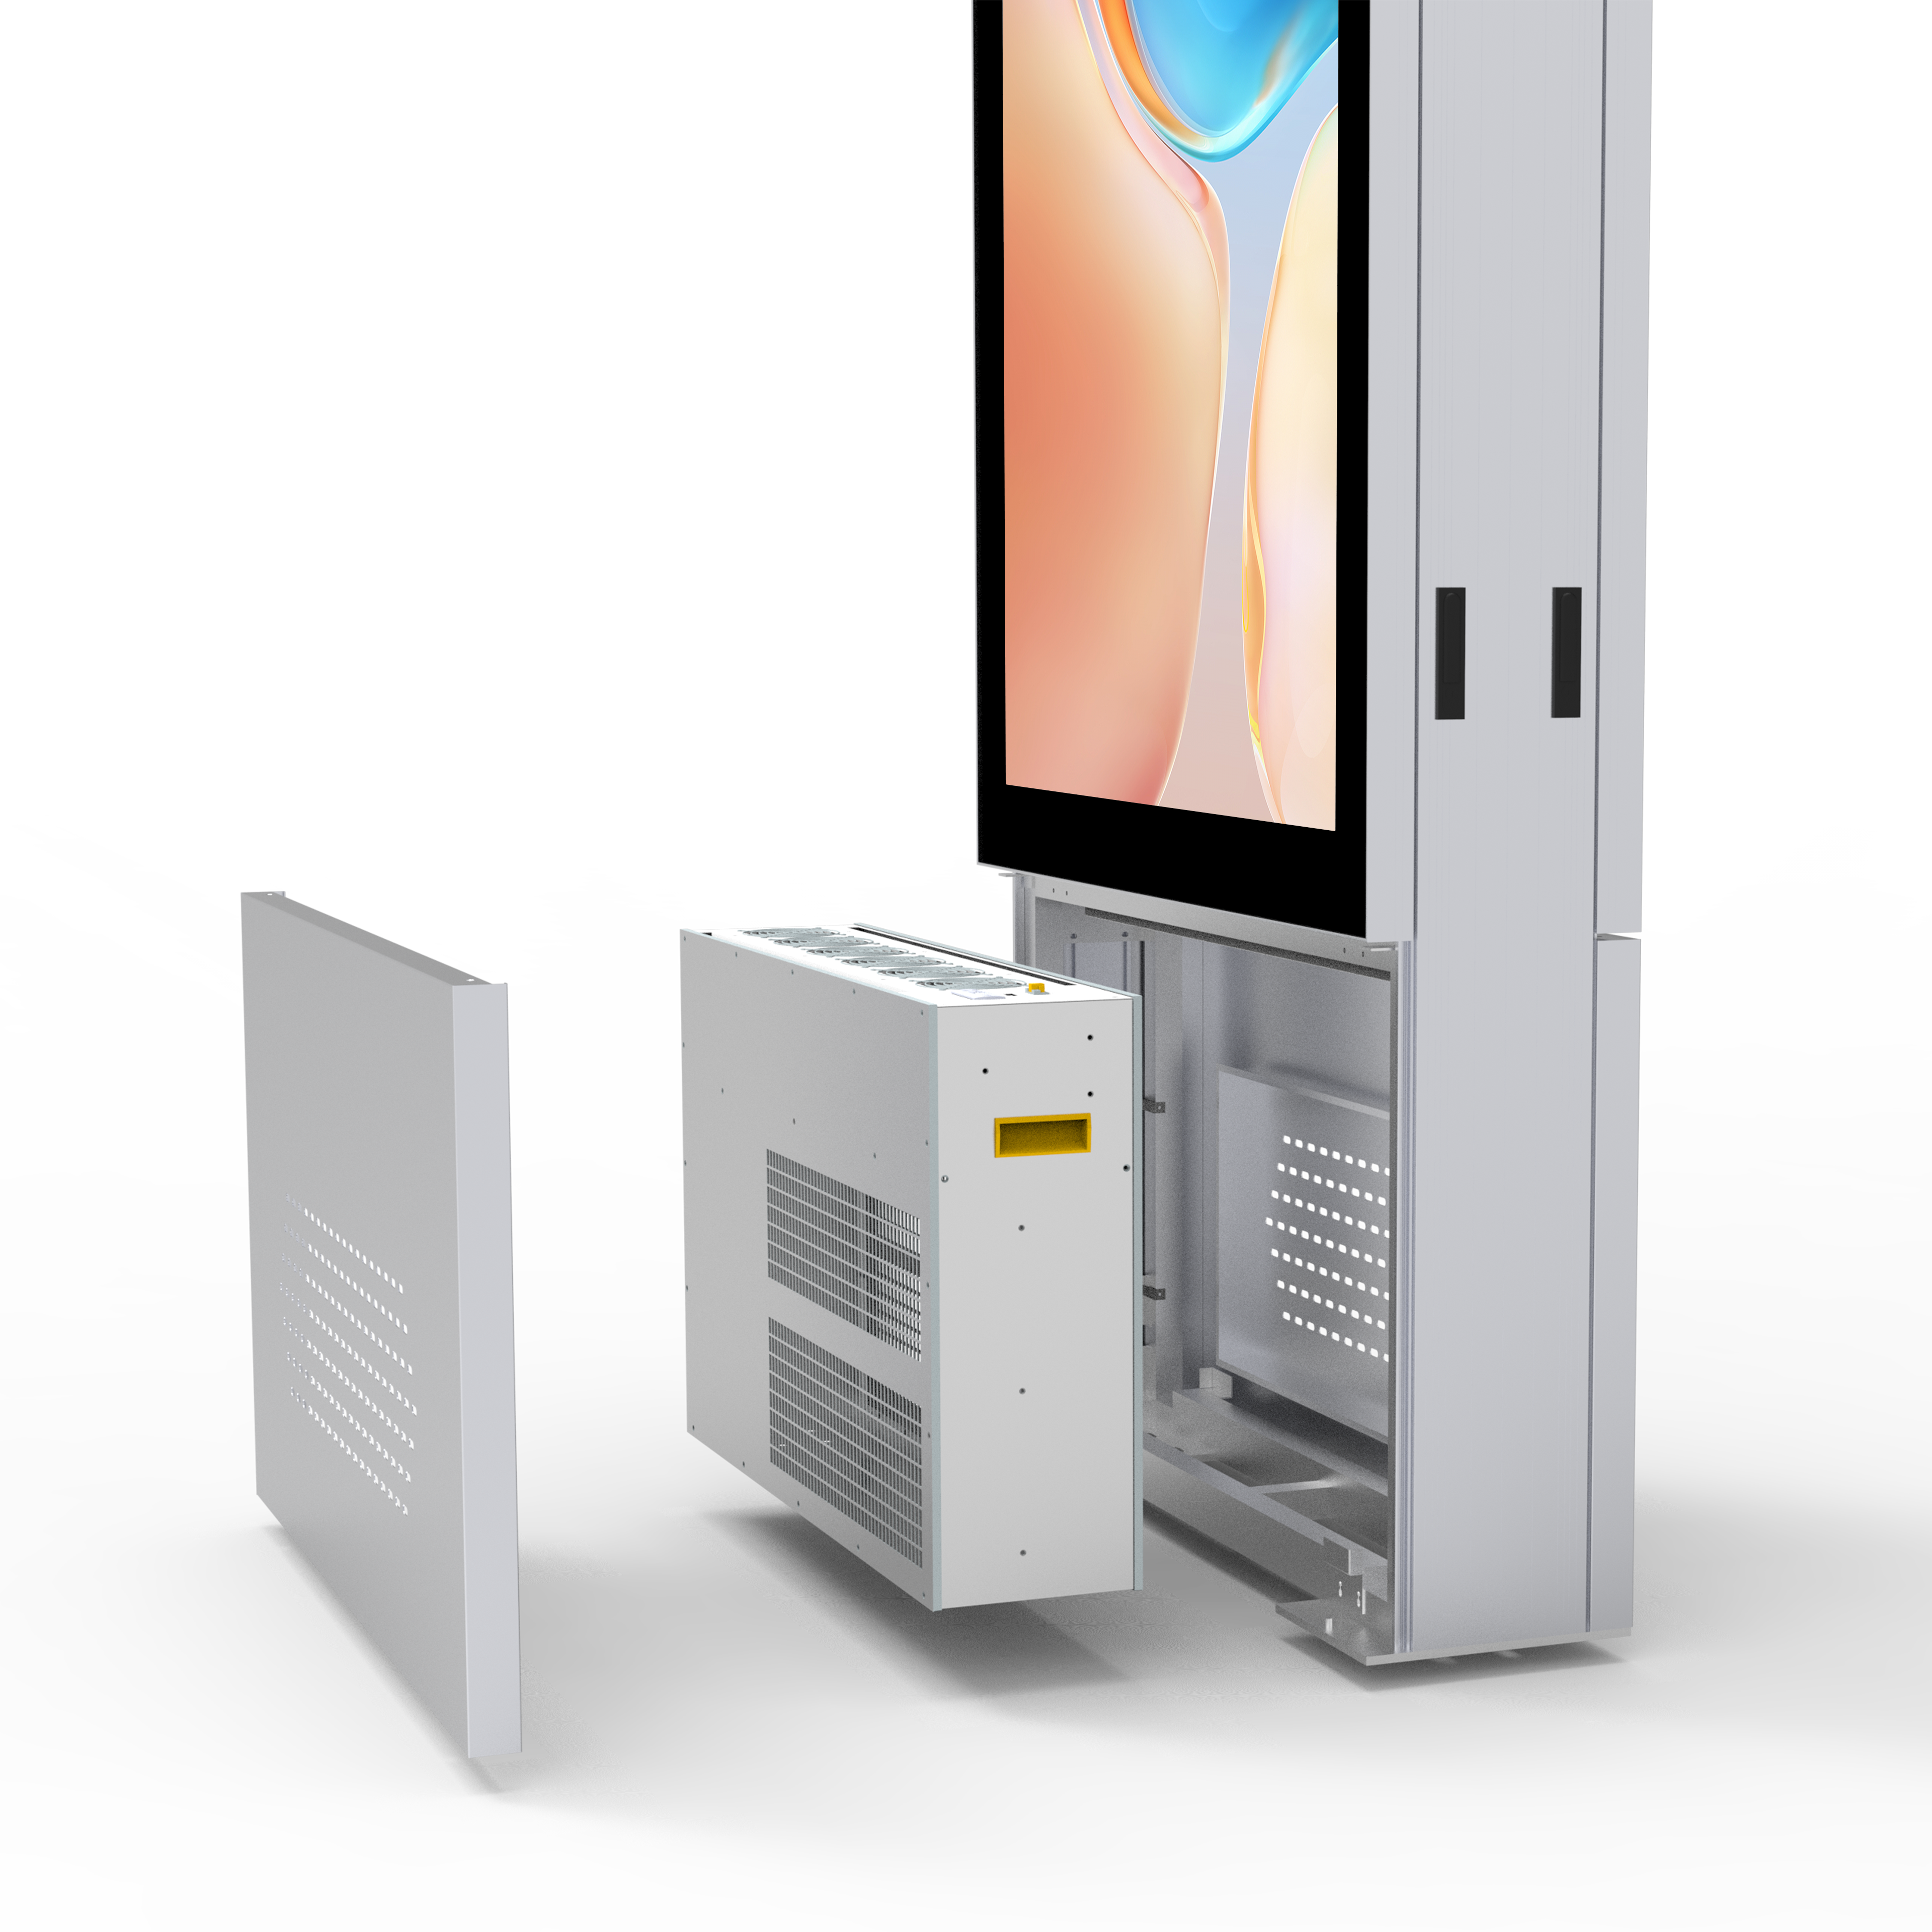 Thermal solutions for utdoor LCD totem